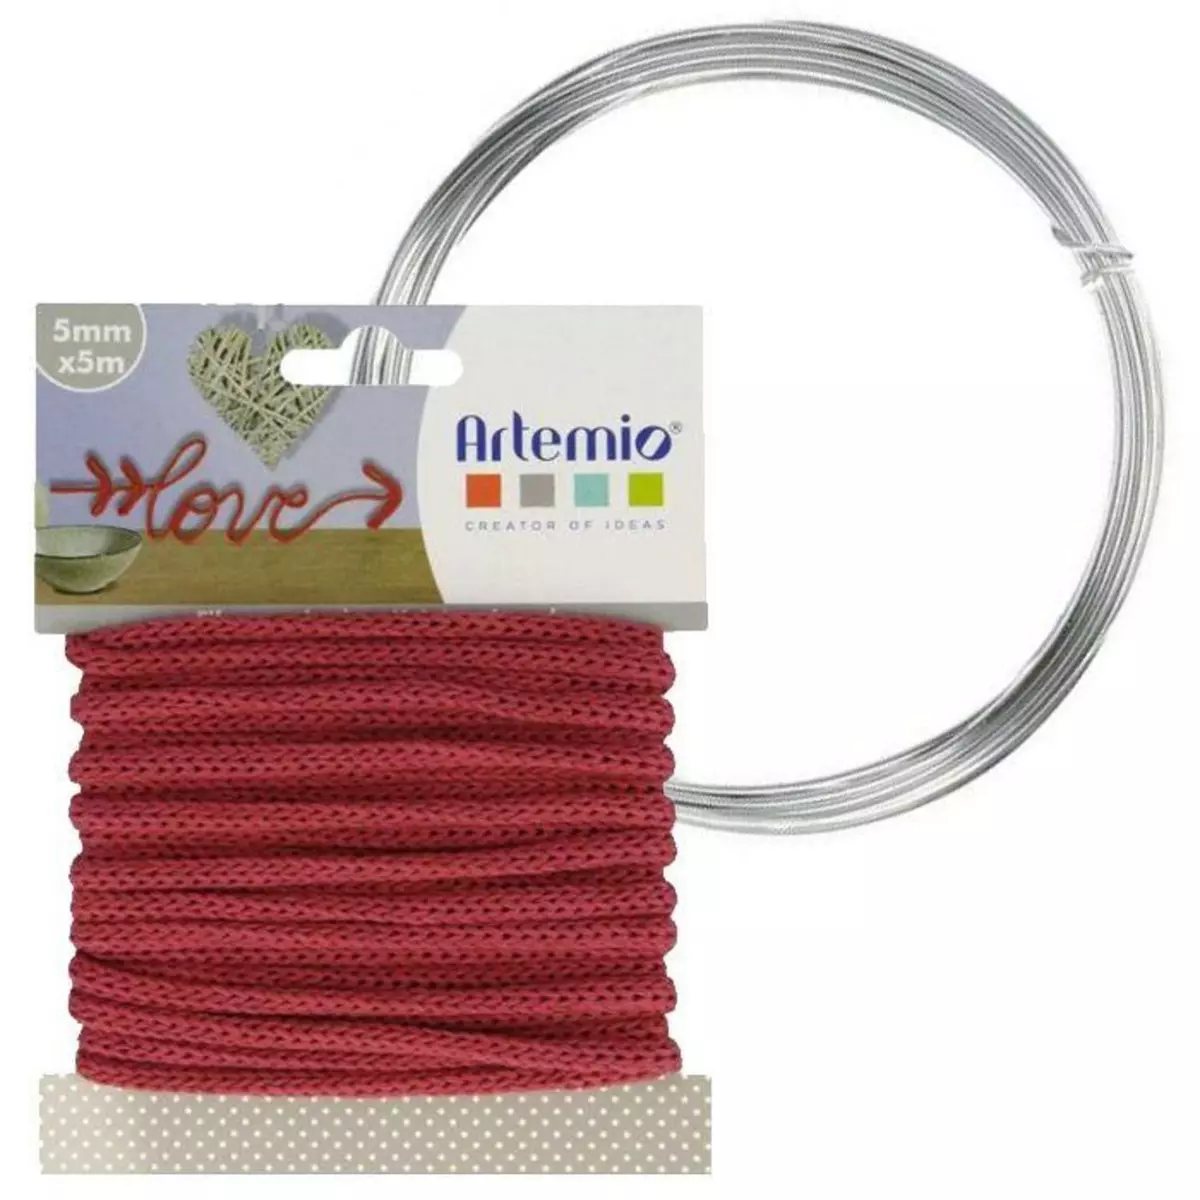 Artemio Fil à tricotin rouge 5 mm x 5 m + fil d'aluminium